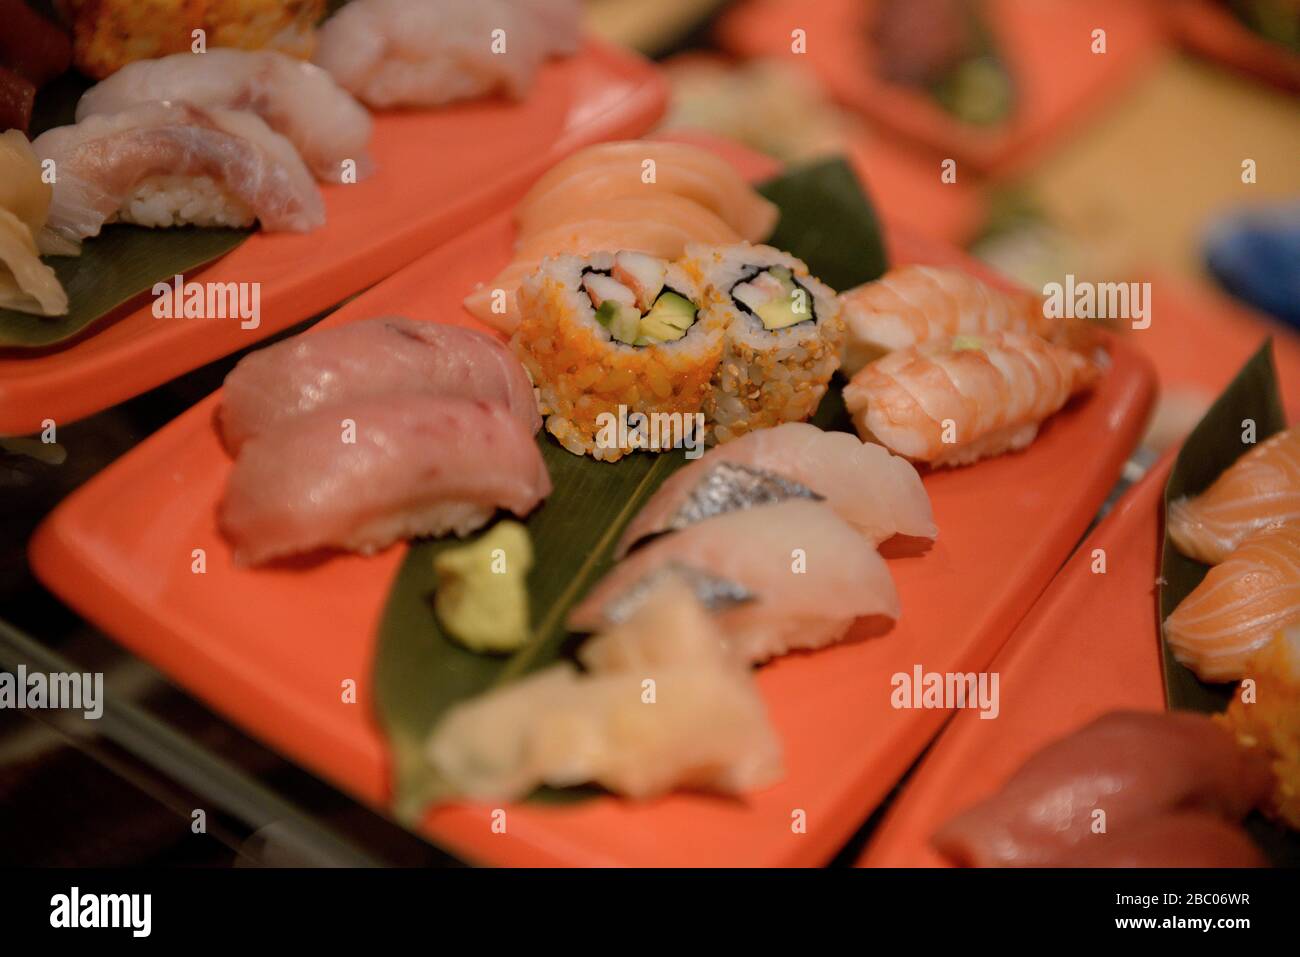 Nobu Matsuhisa High Resolution Stock Photography and Images - Alamy